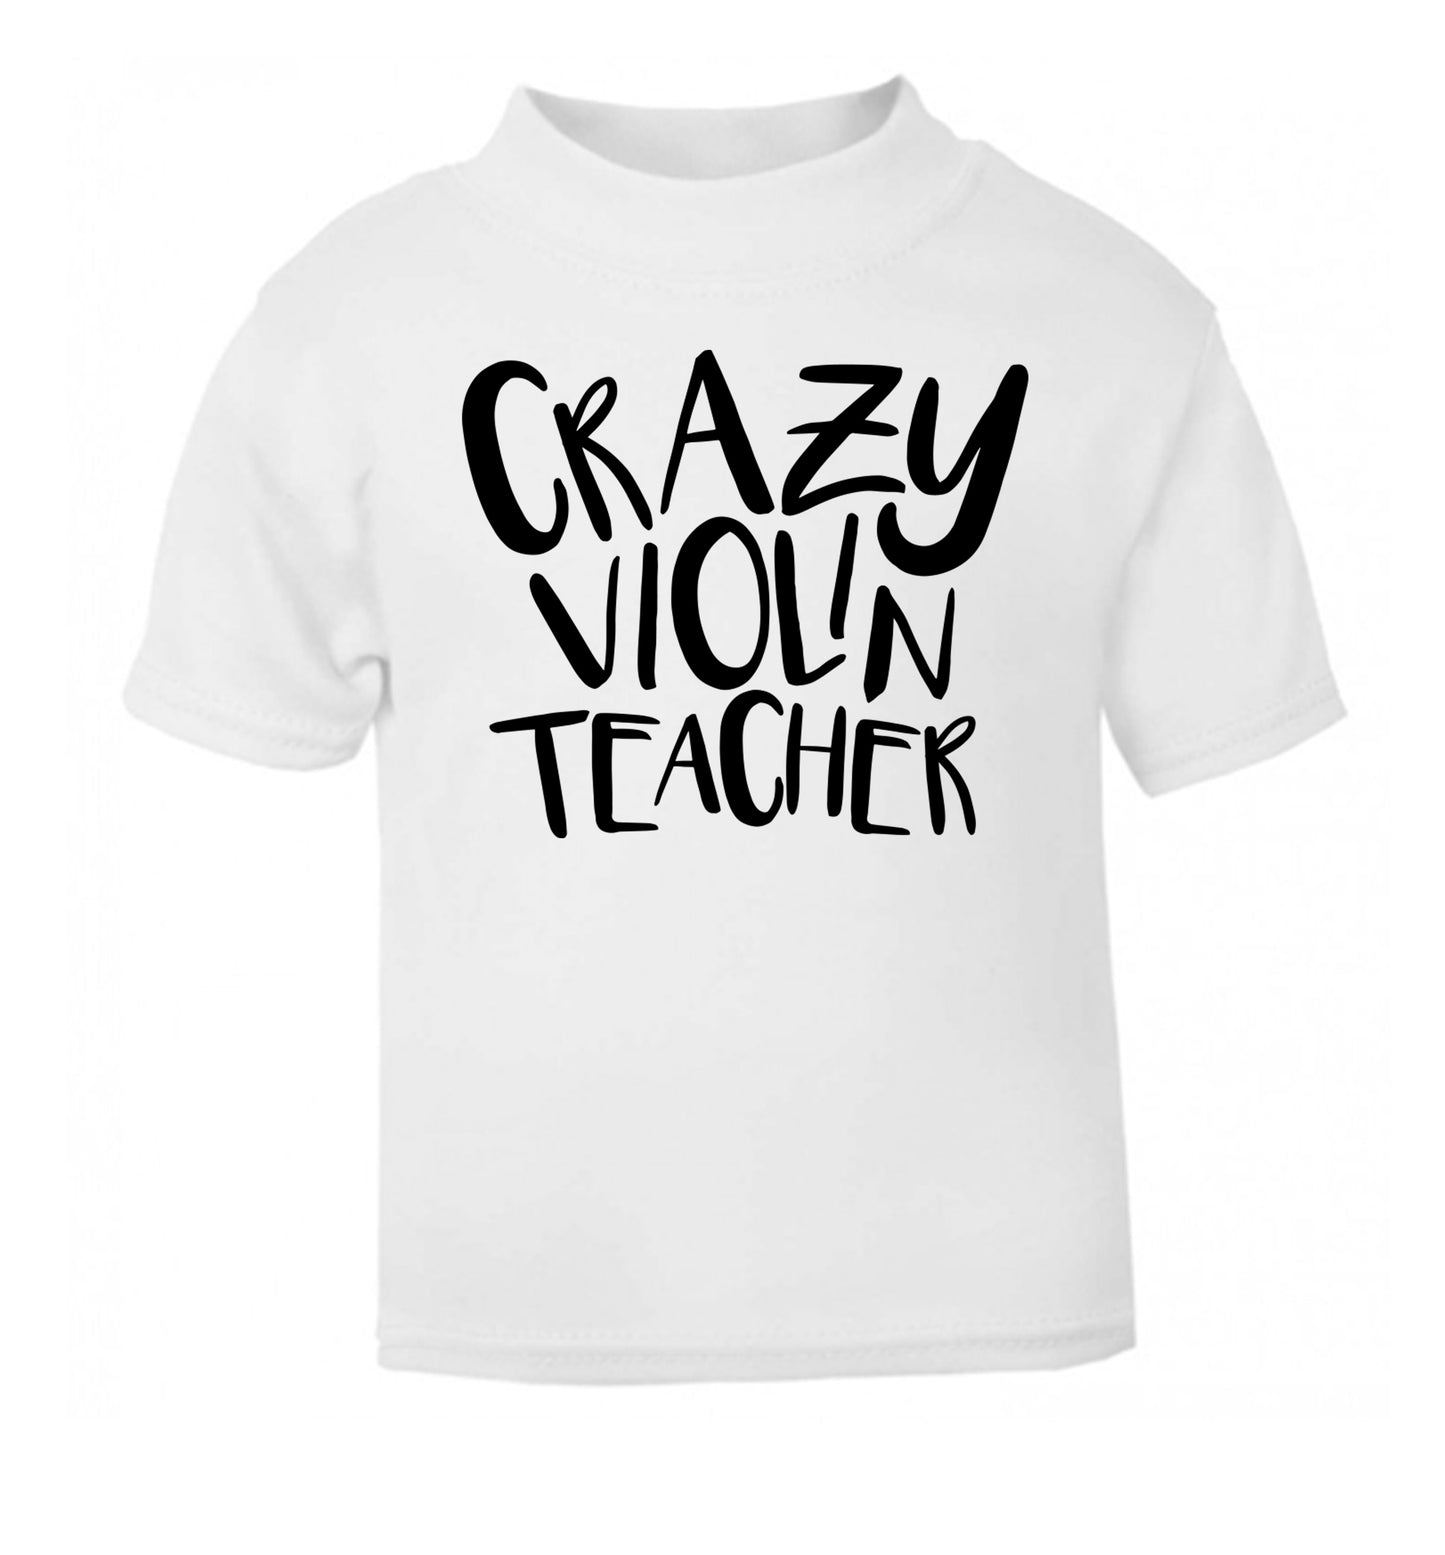 Crazy violin teacher white Baby Toddler Tshirt 2 Years